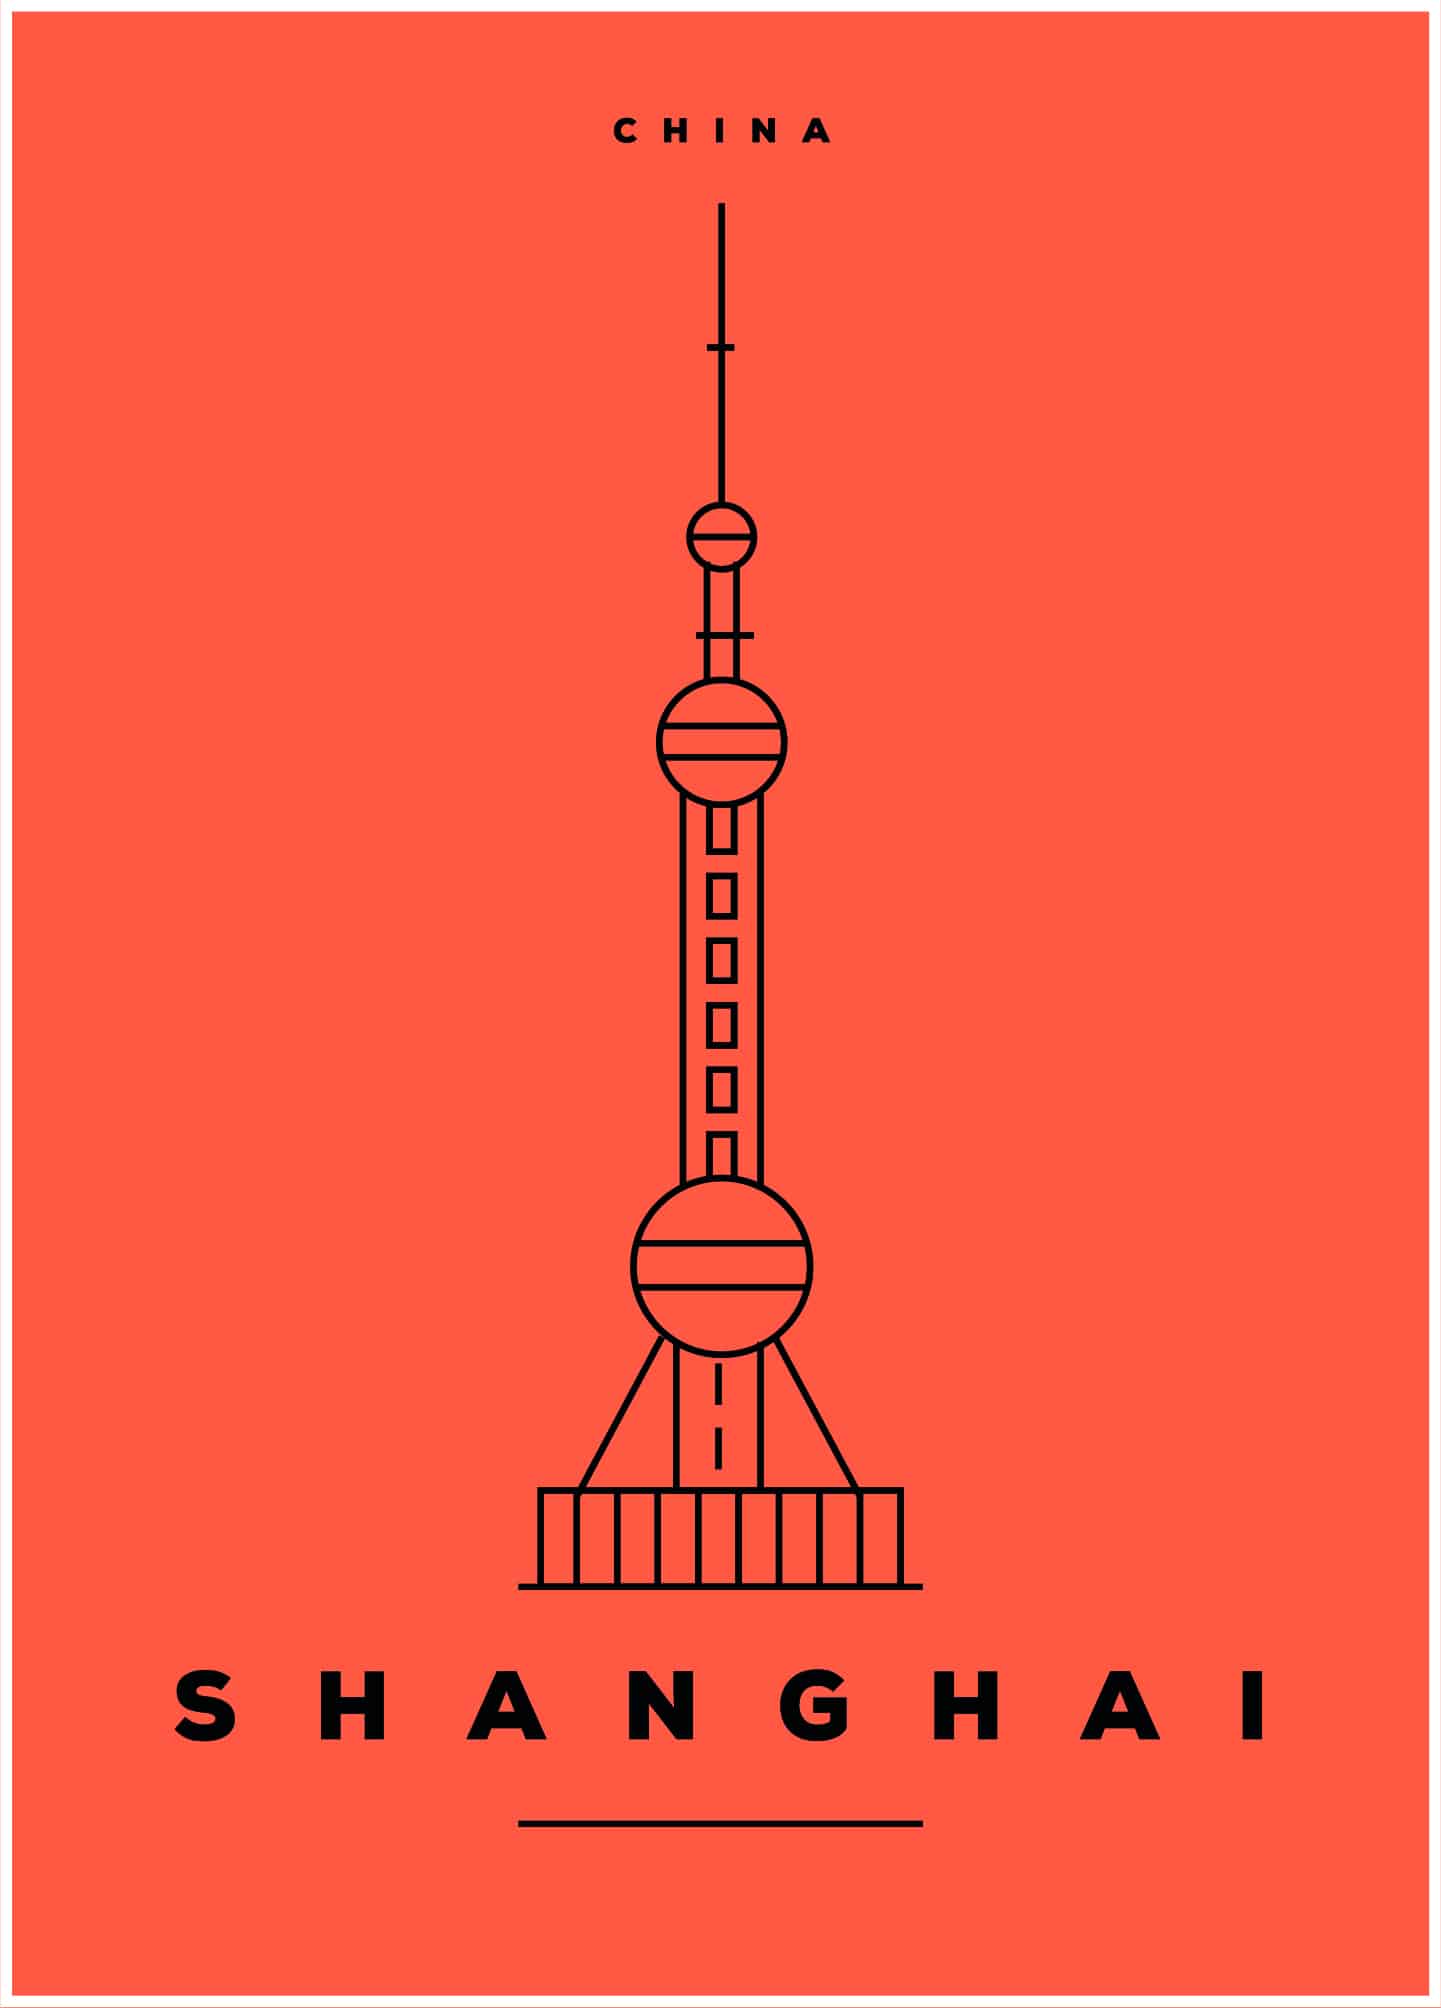 Shanghai, Kina poster